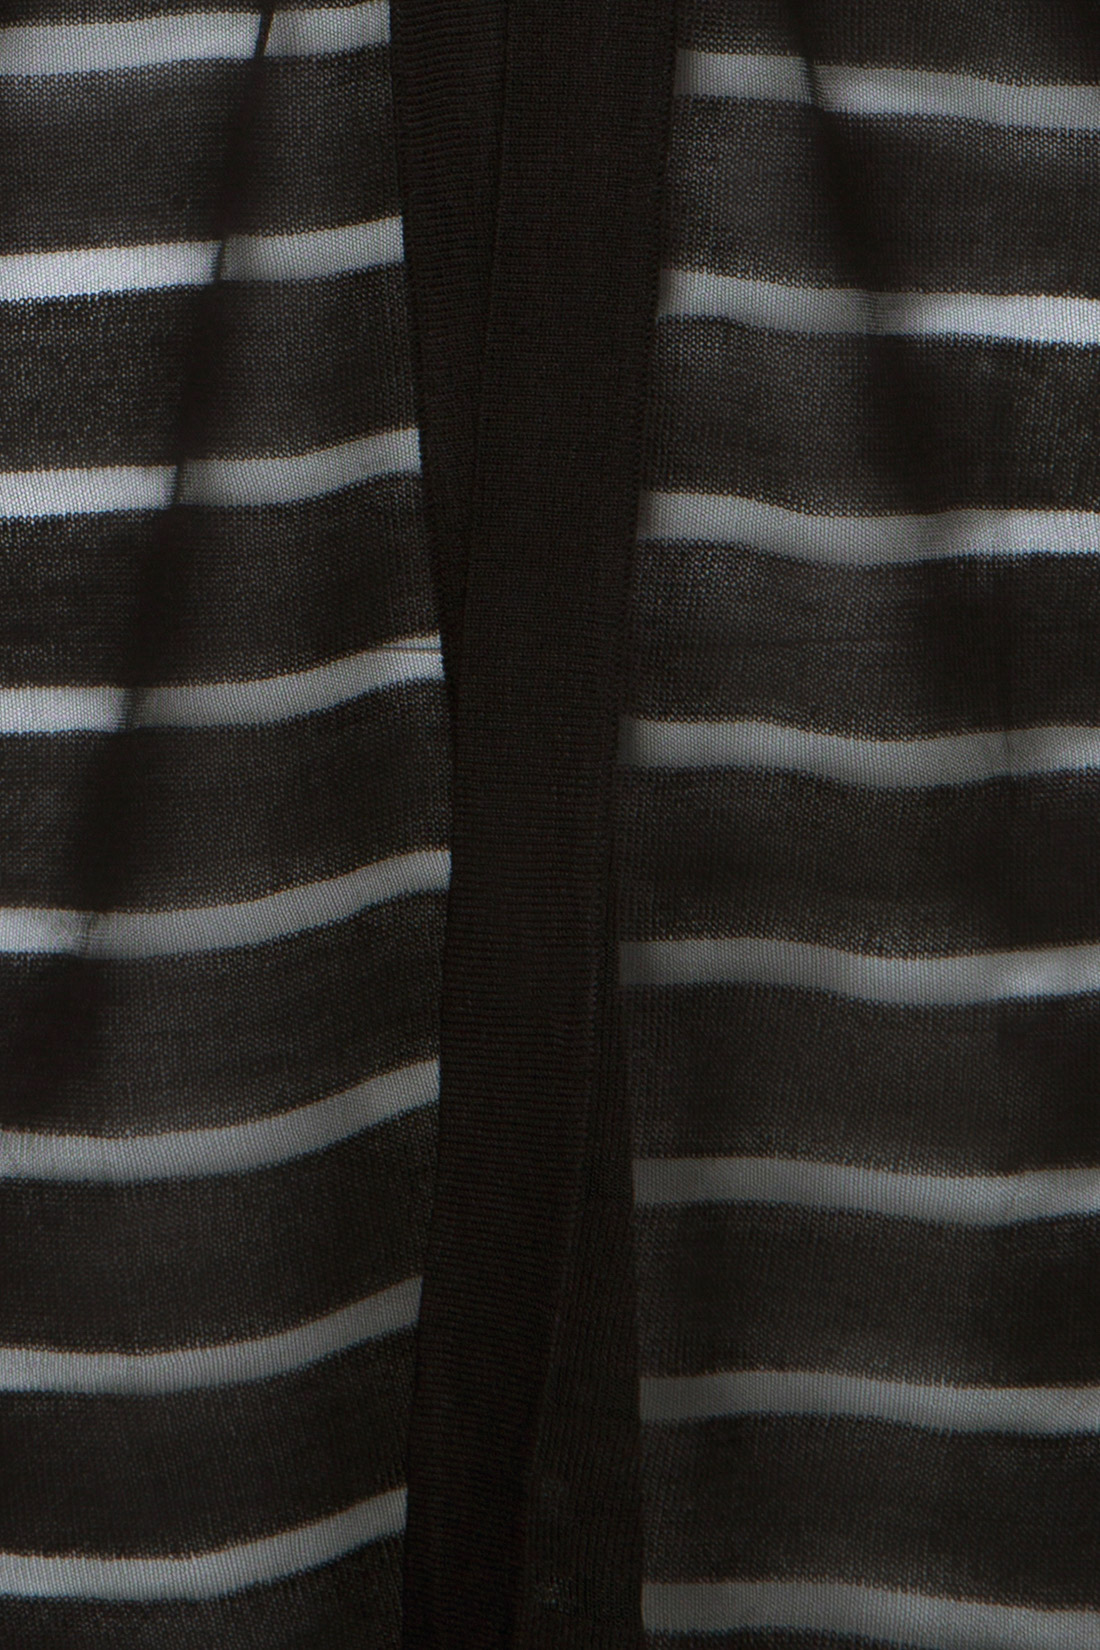 Кардиган с полупрозрачными полосами (арт. baon B147005), размер XS, цвет черный Кардиган с полупрозрачными полосами (арт. baon B147005) - фото 3